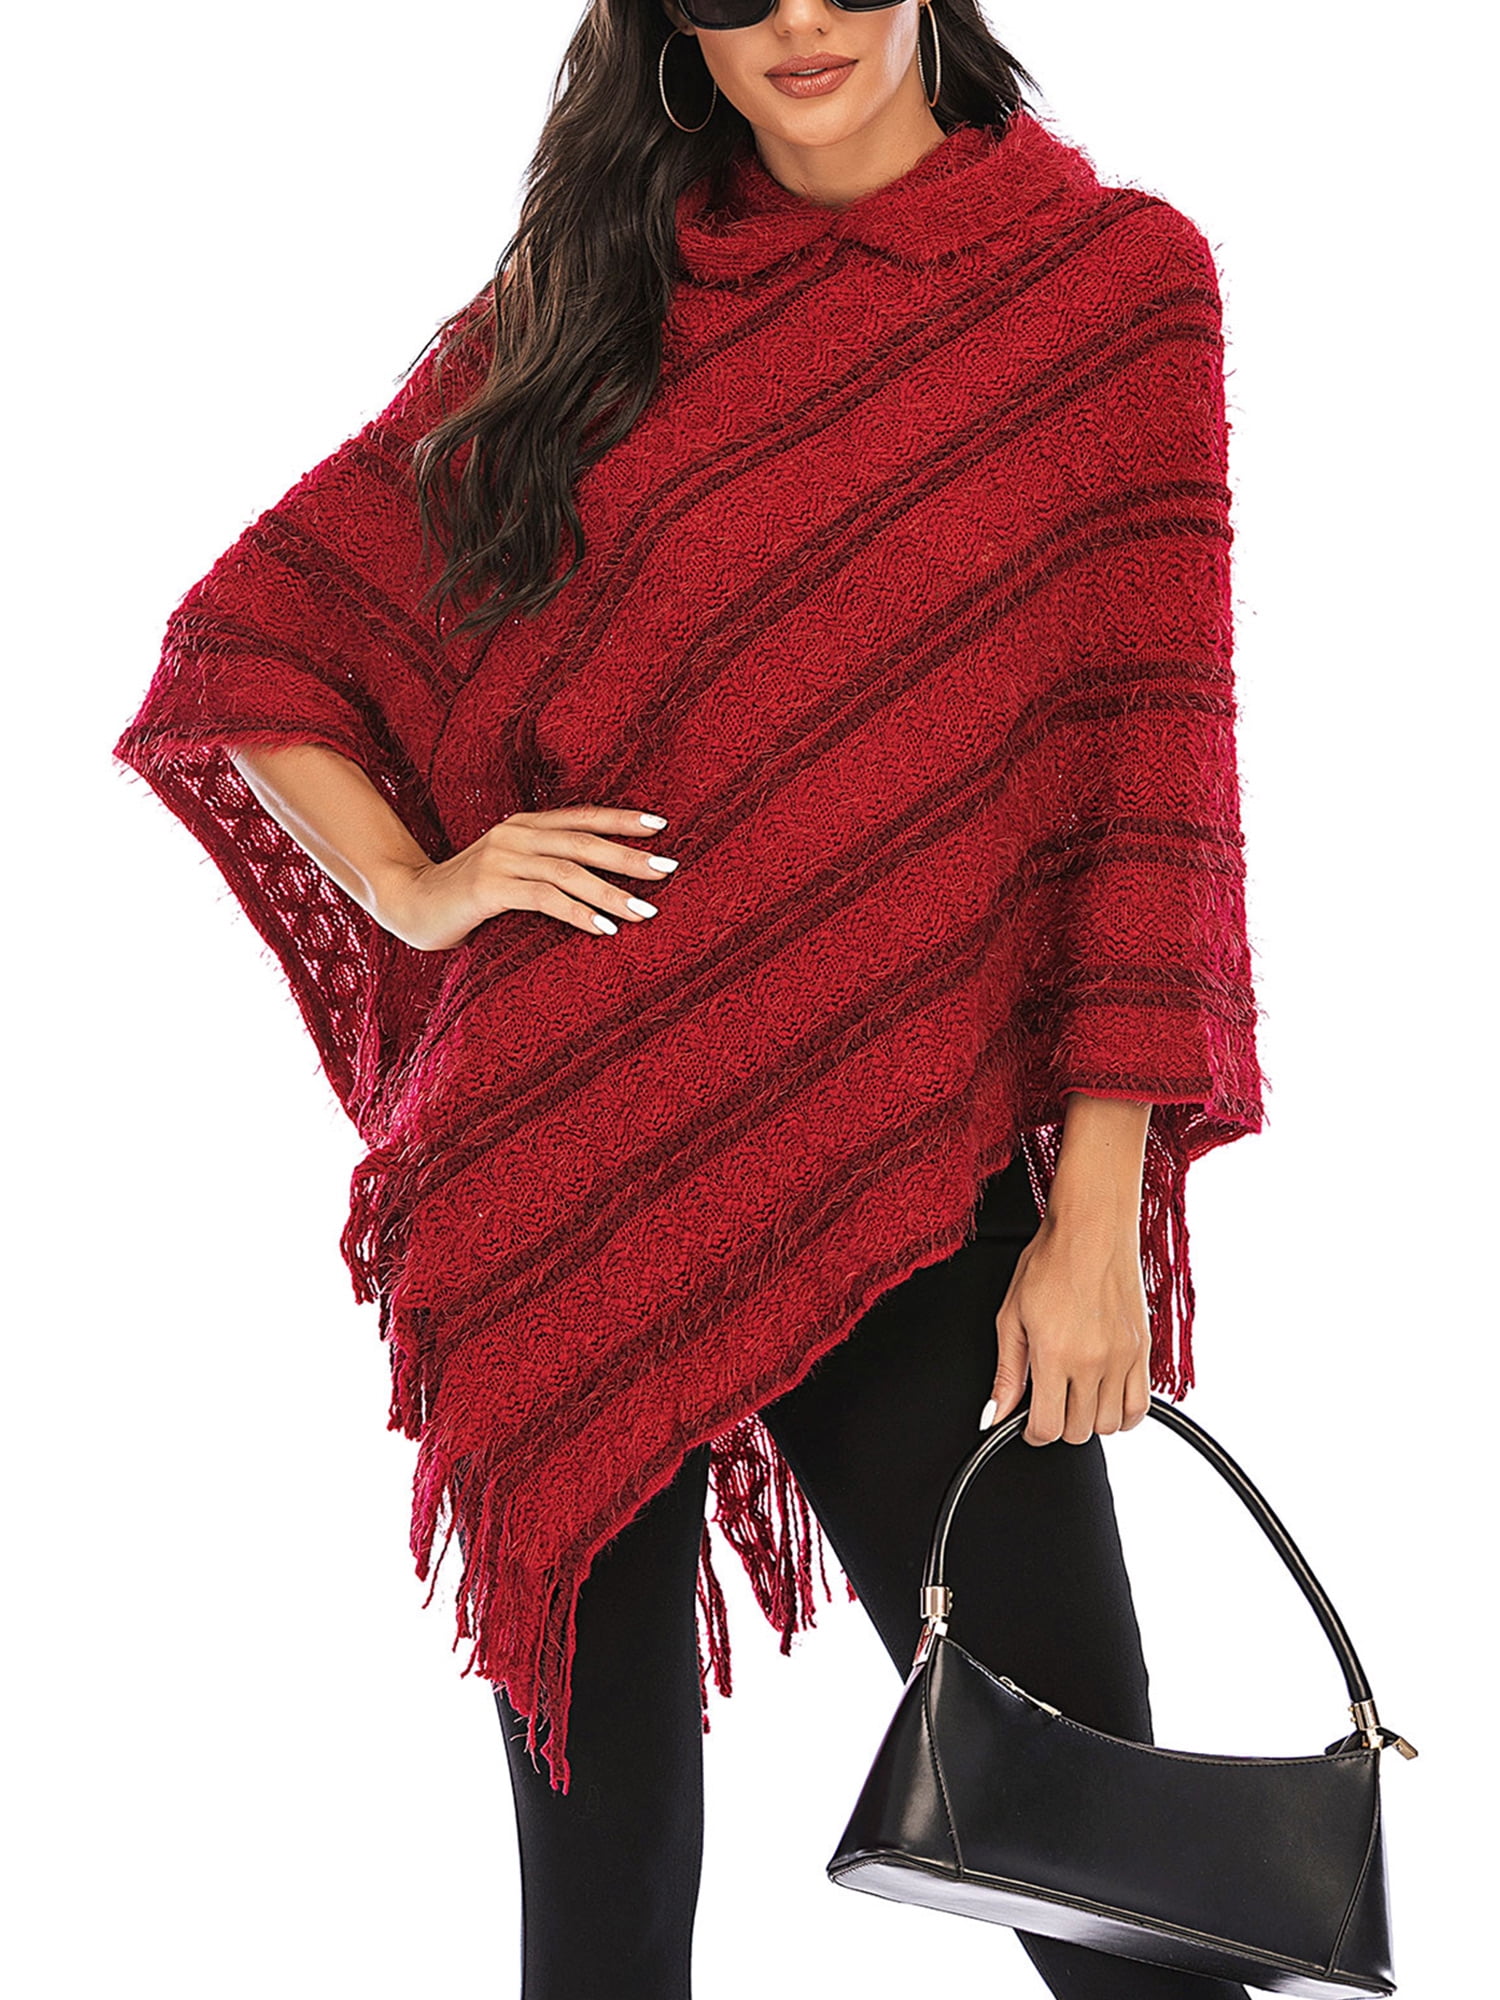 Winter Fringe Poncho Plus Size Knit Shawl Wrap Cardigan Cape Scarf for Women